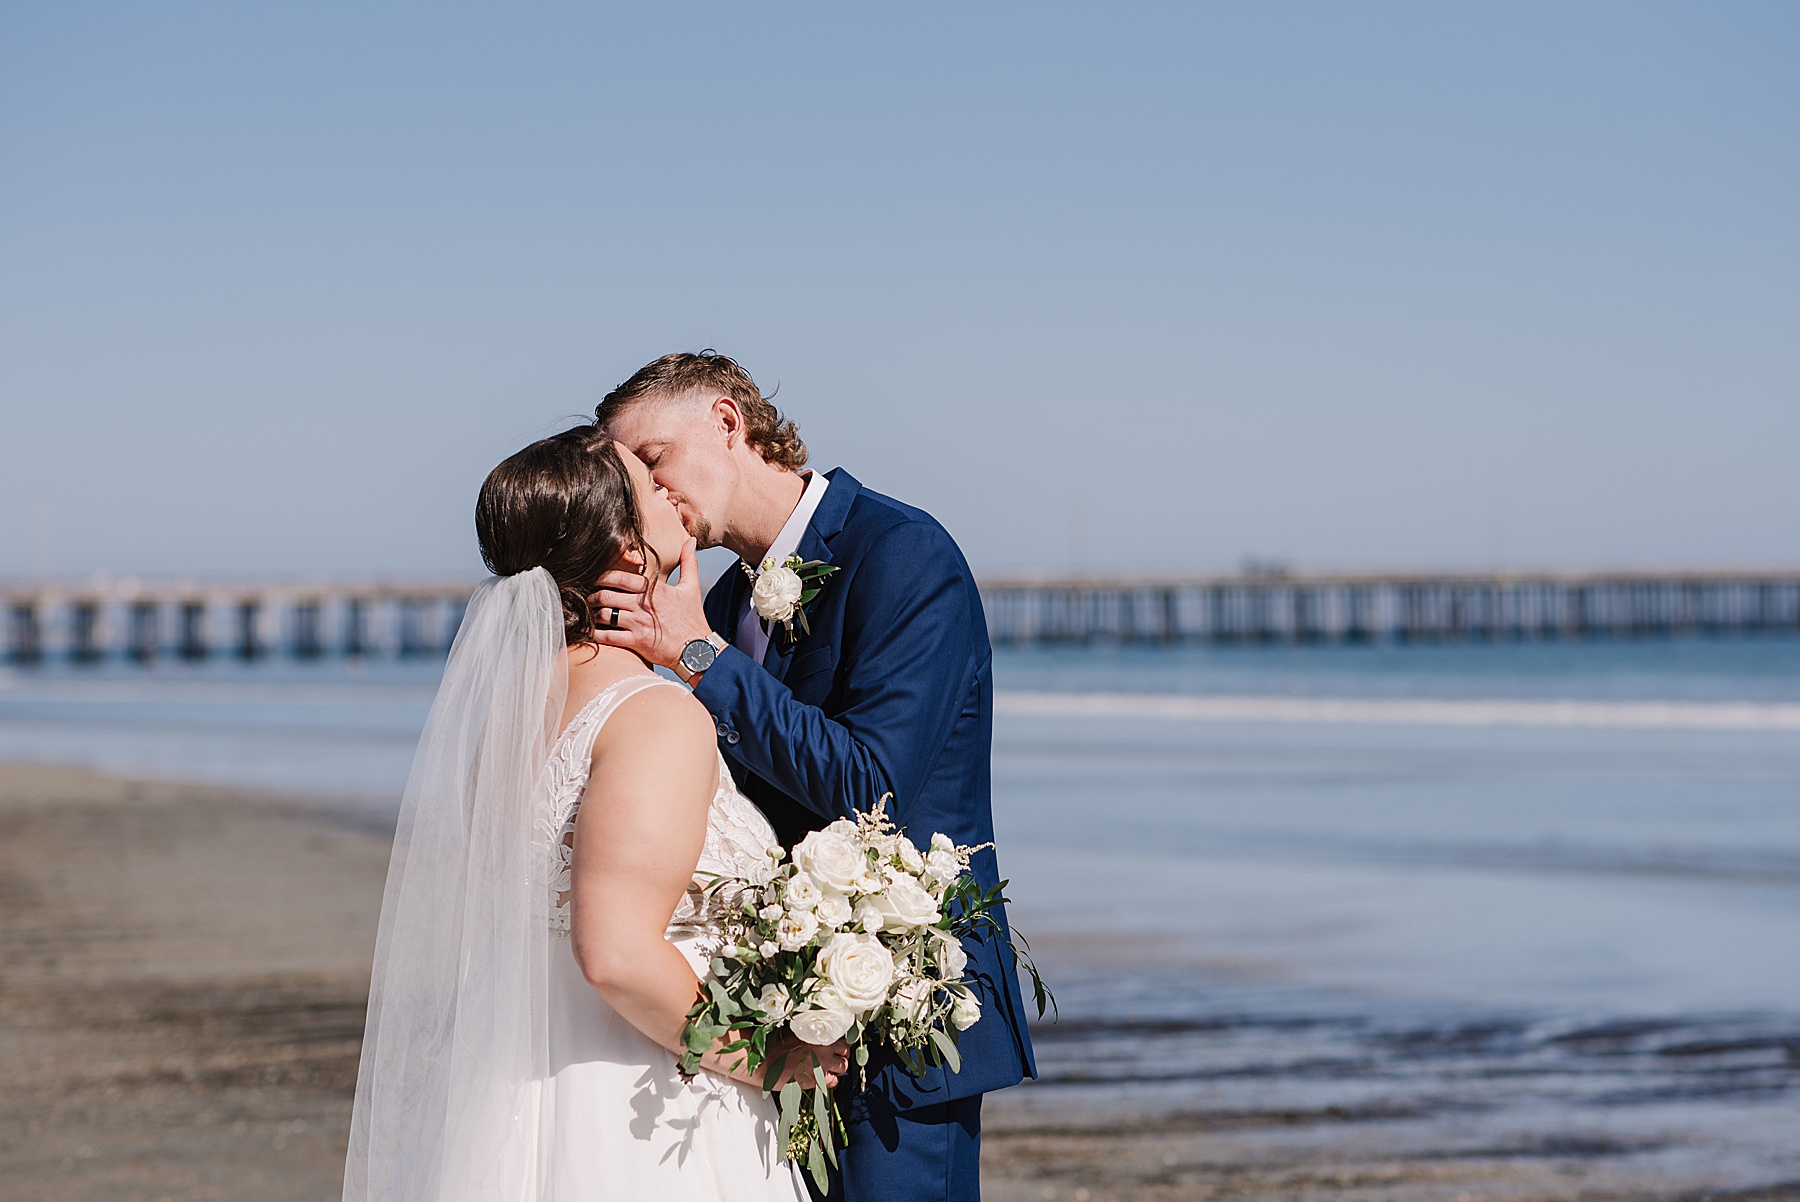 Avila Beach Lighthouse Suites intimate wedding ceremony